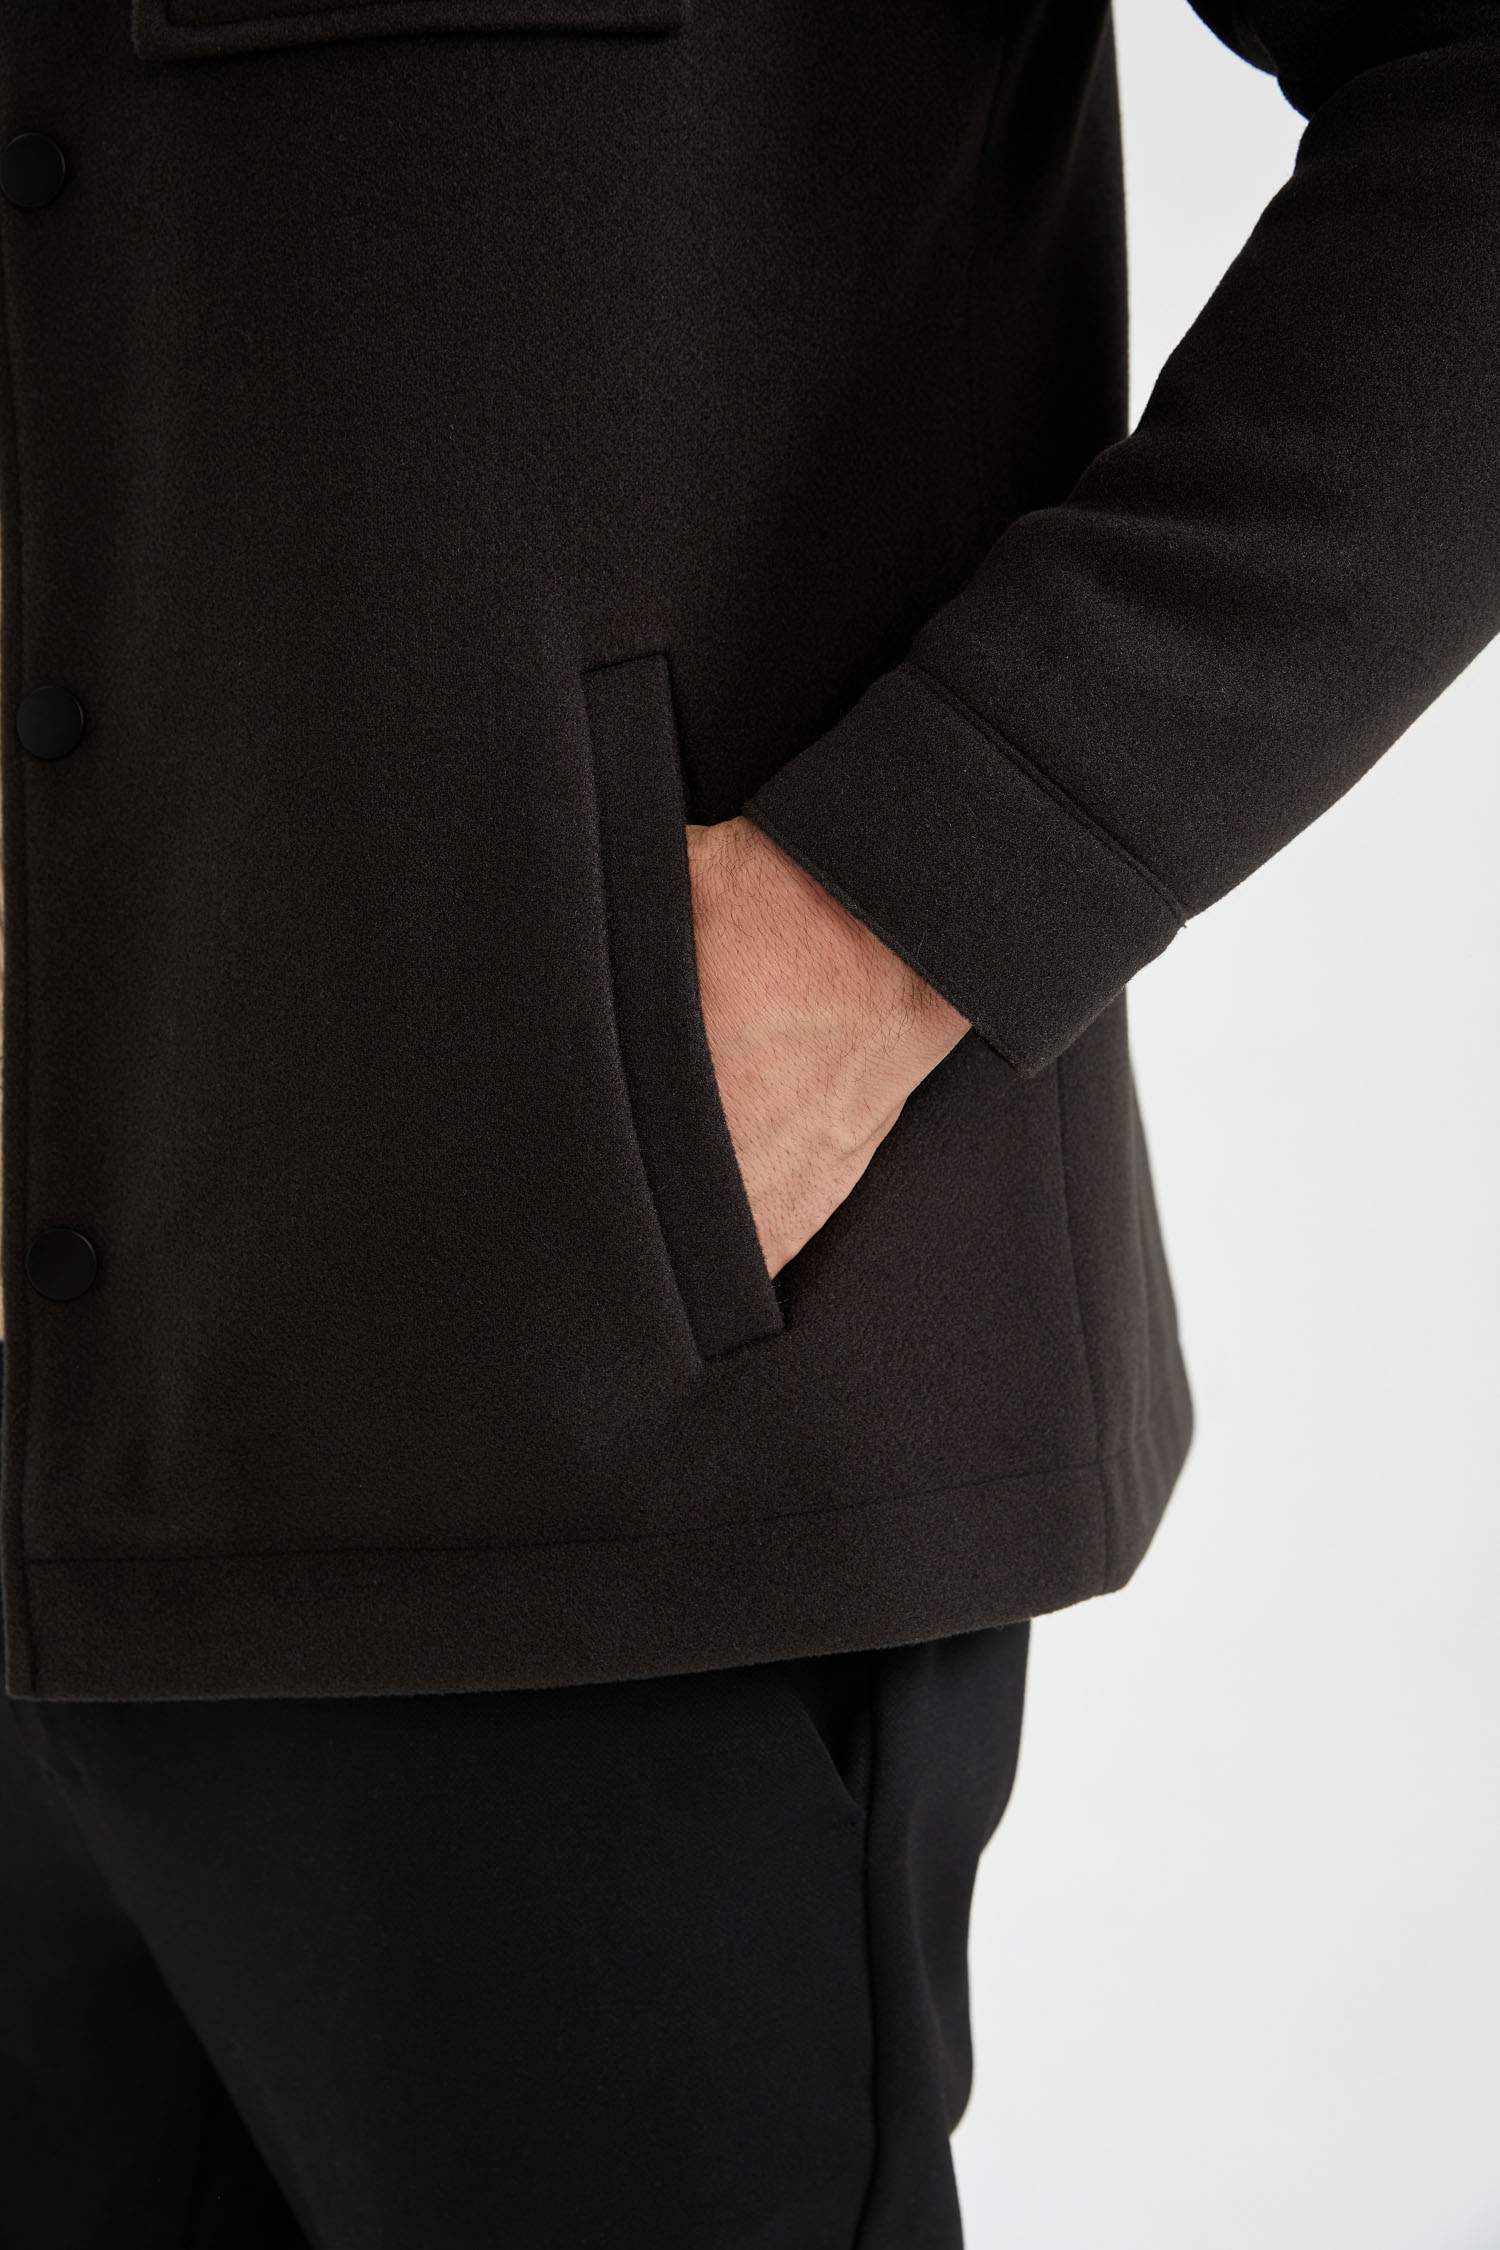 YHEGHT Jaqueta casual casaco slim fit grossa bolha masculina